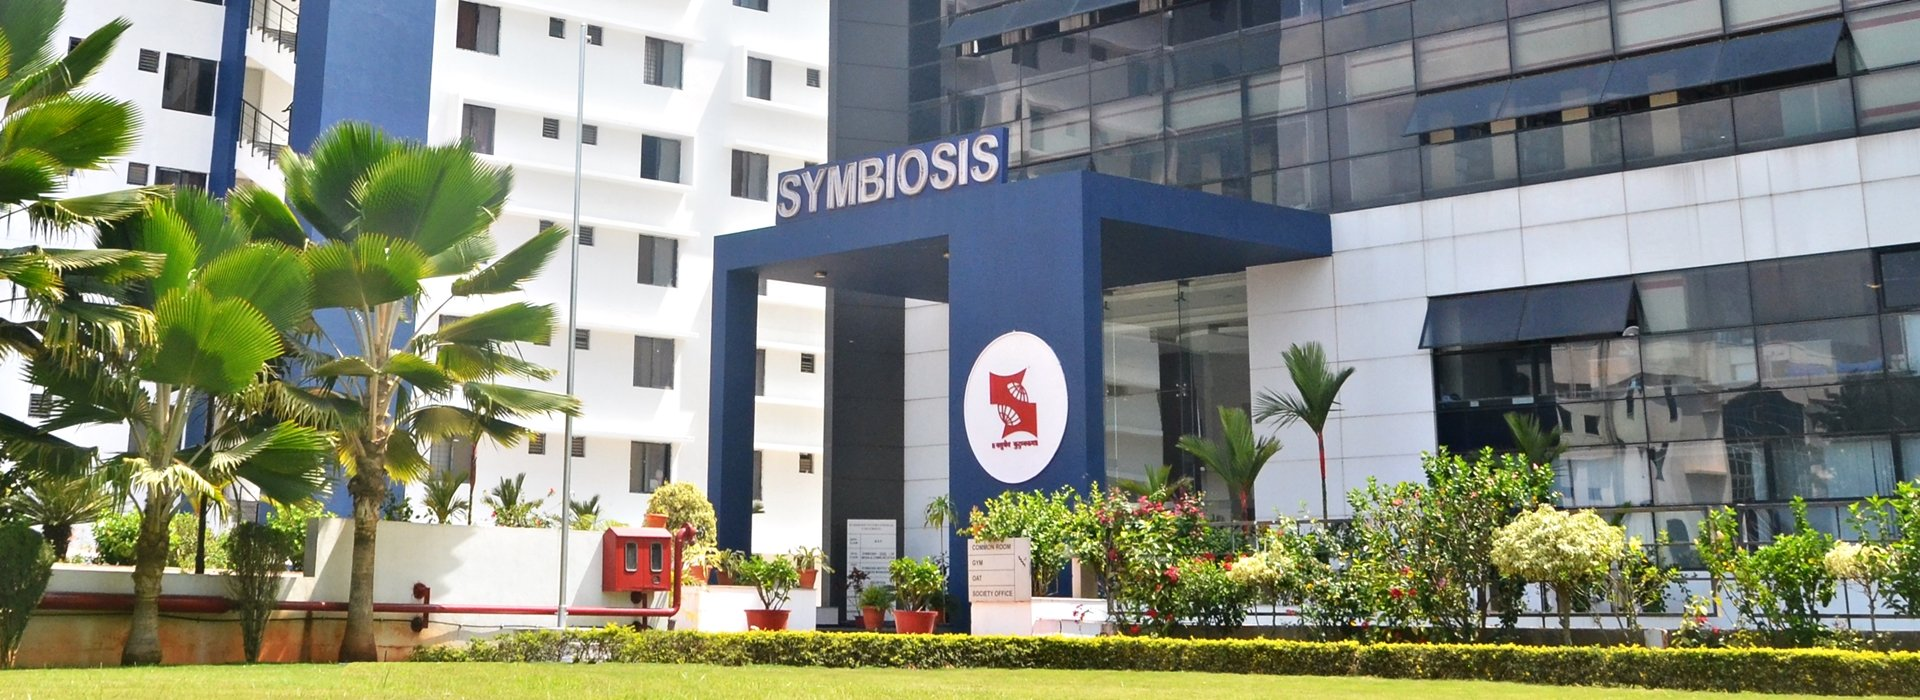 Symbiosis School of Media and Communication, Bengaluru Image